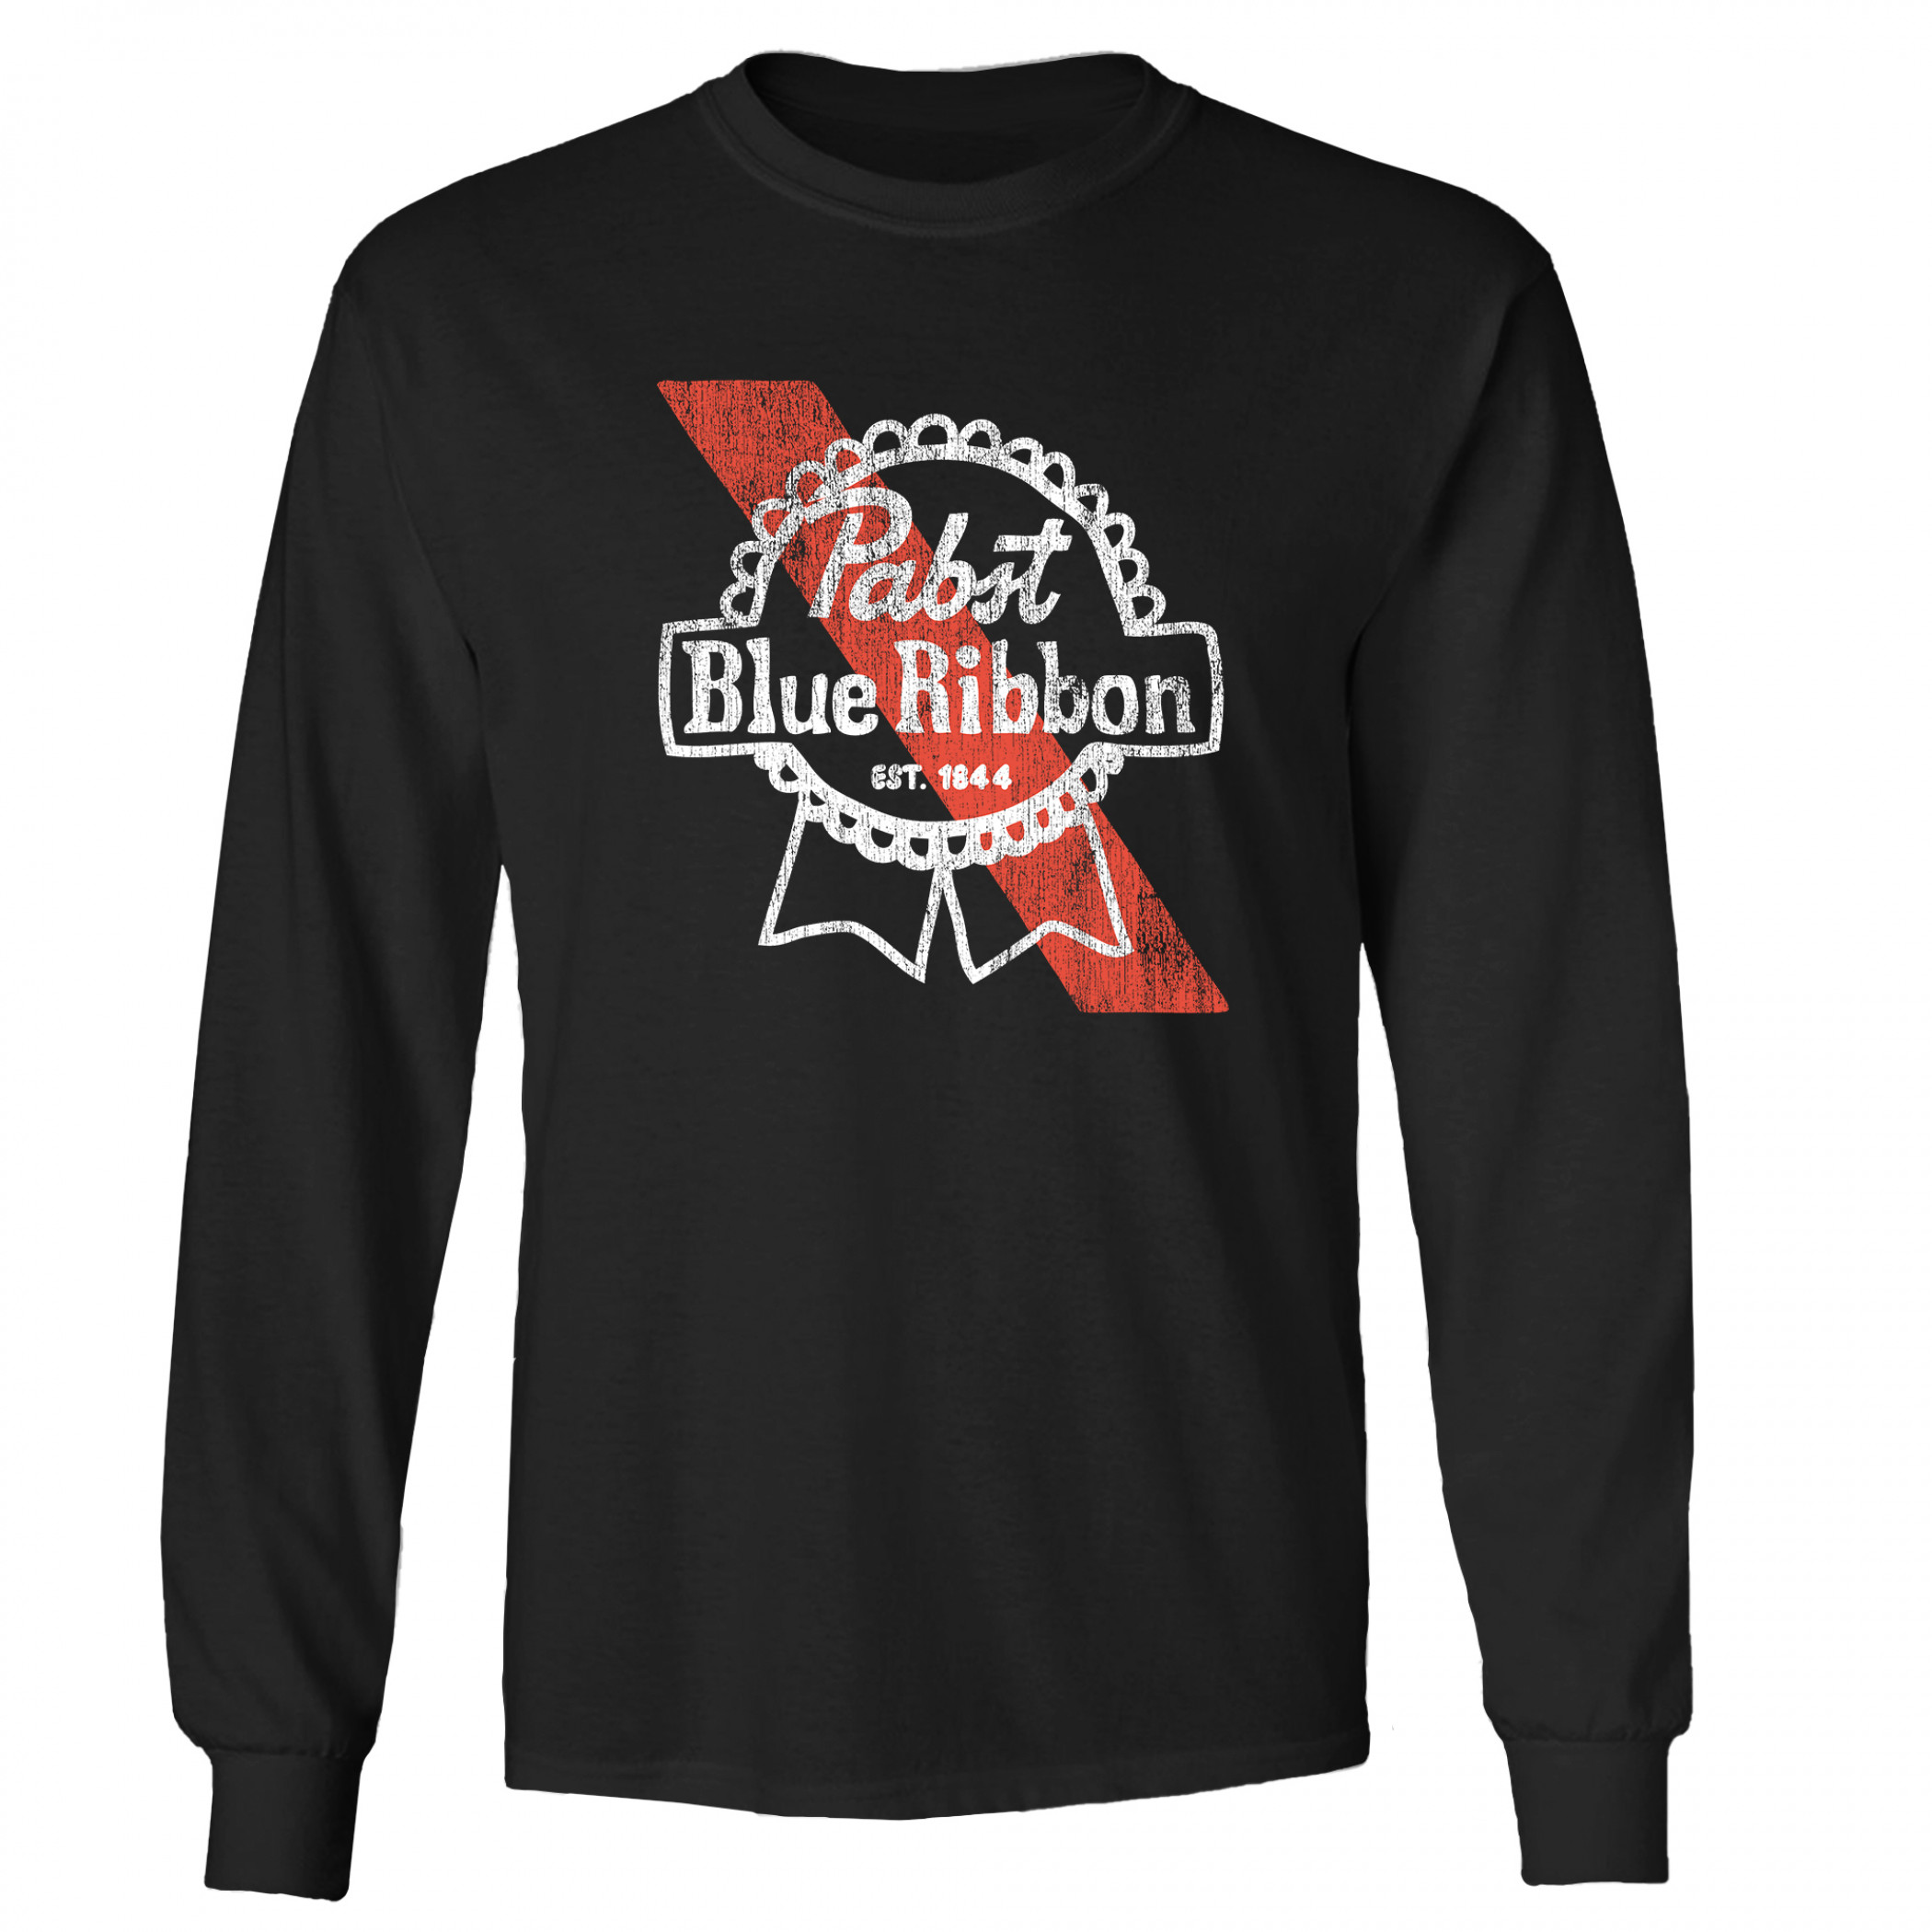 Pabst Blue Ribbon (PBR) Vintage Logo Black Colorway Sweatshirt